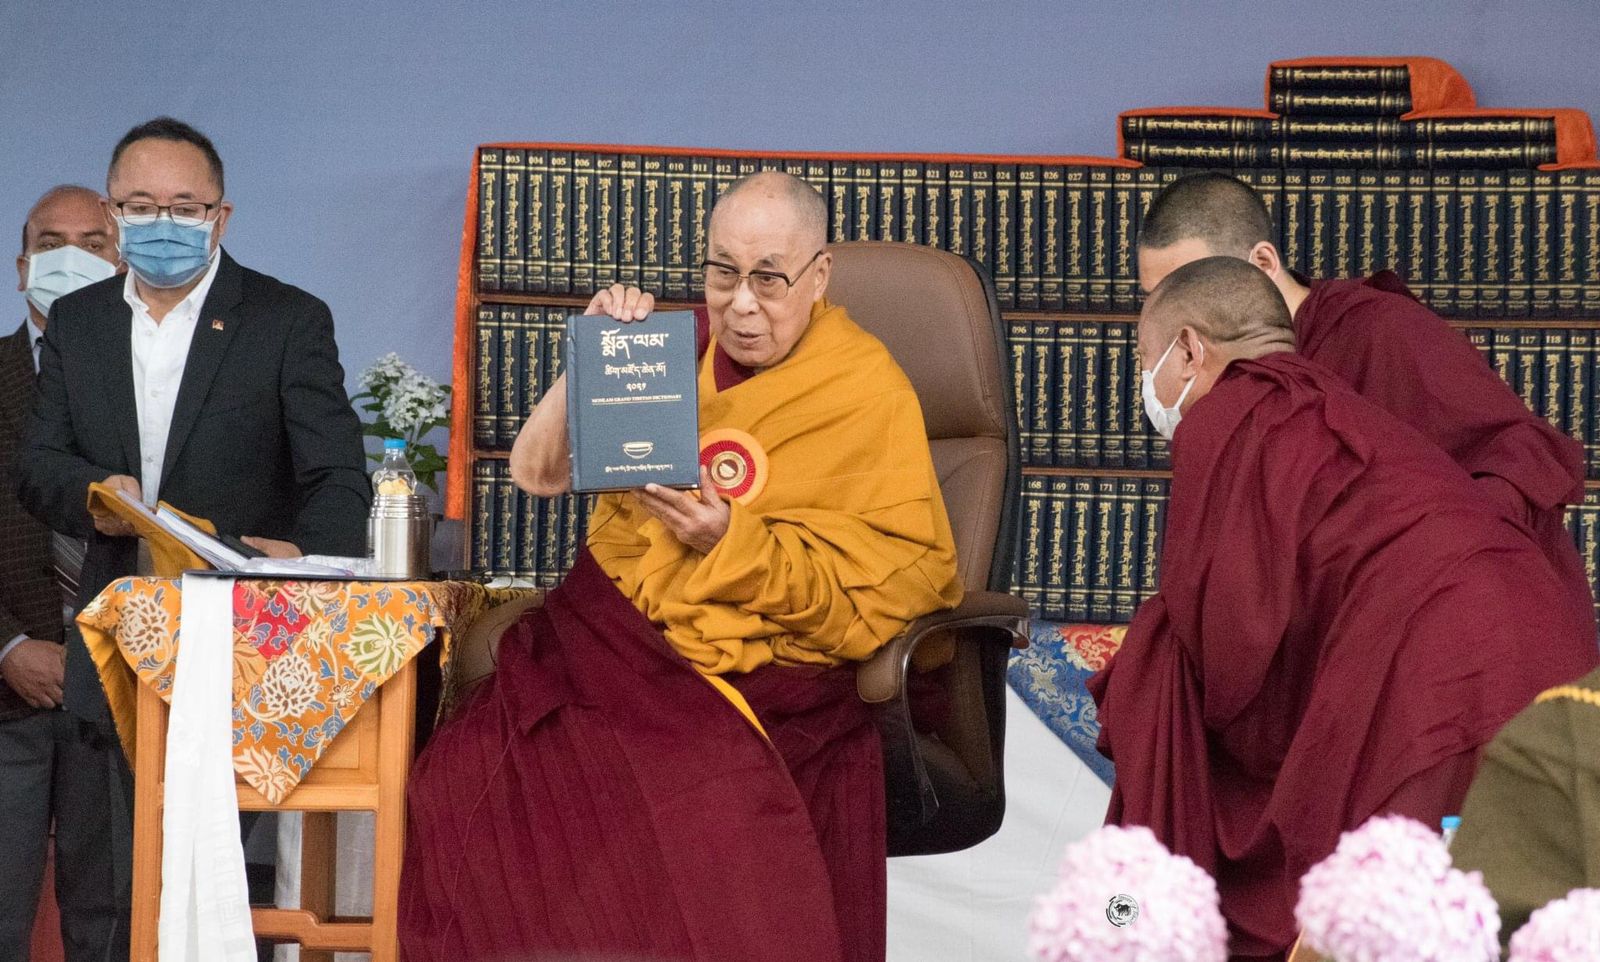 HH Dalai Lama Inaugurates the New Monlam Grand Tibetan Dictionary 